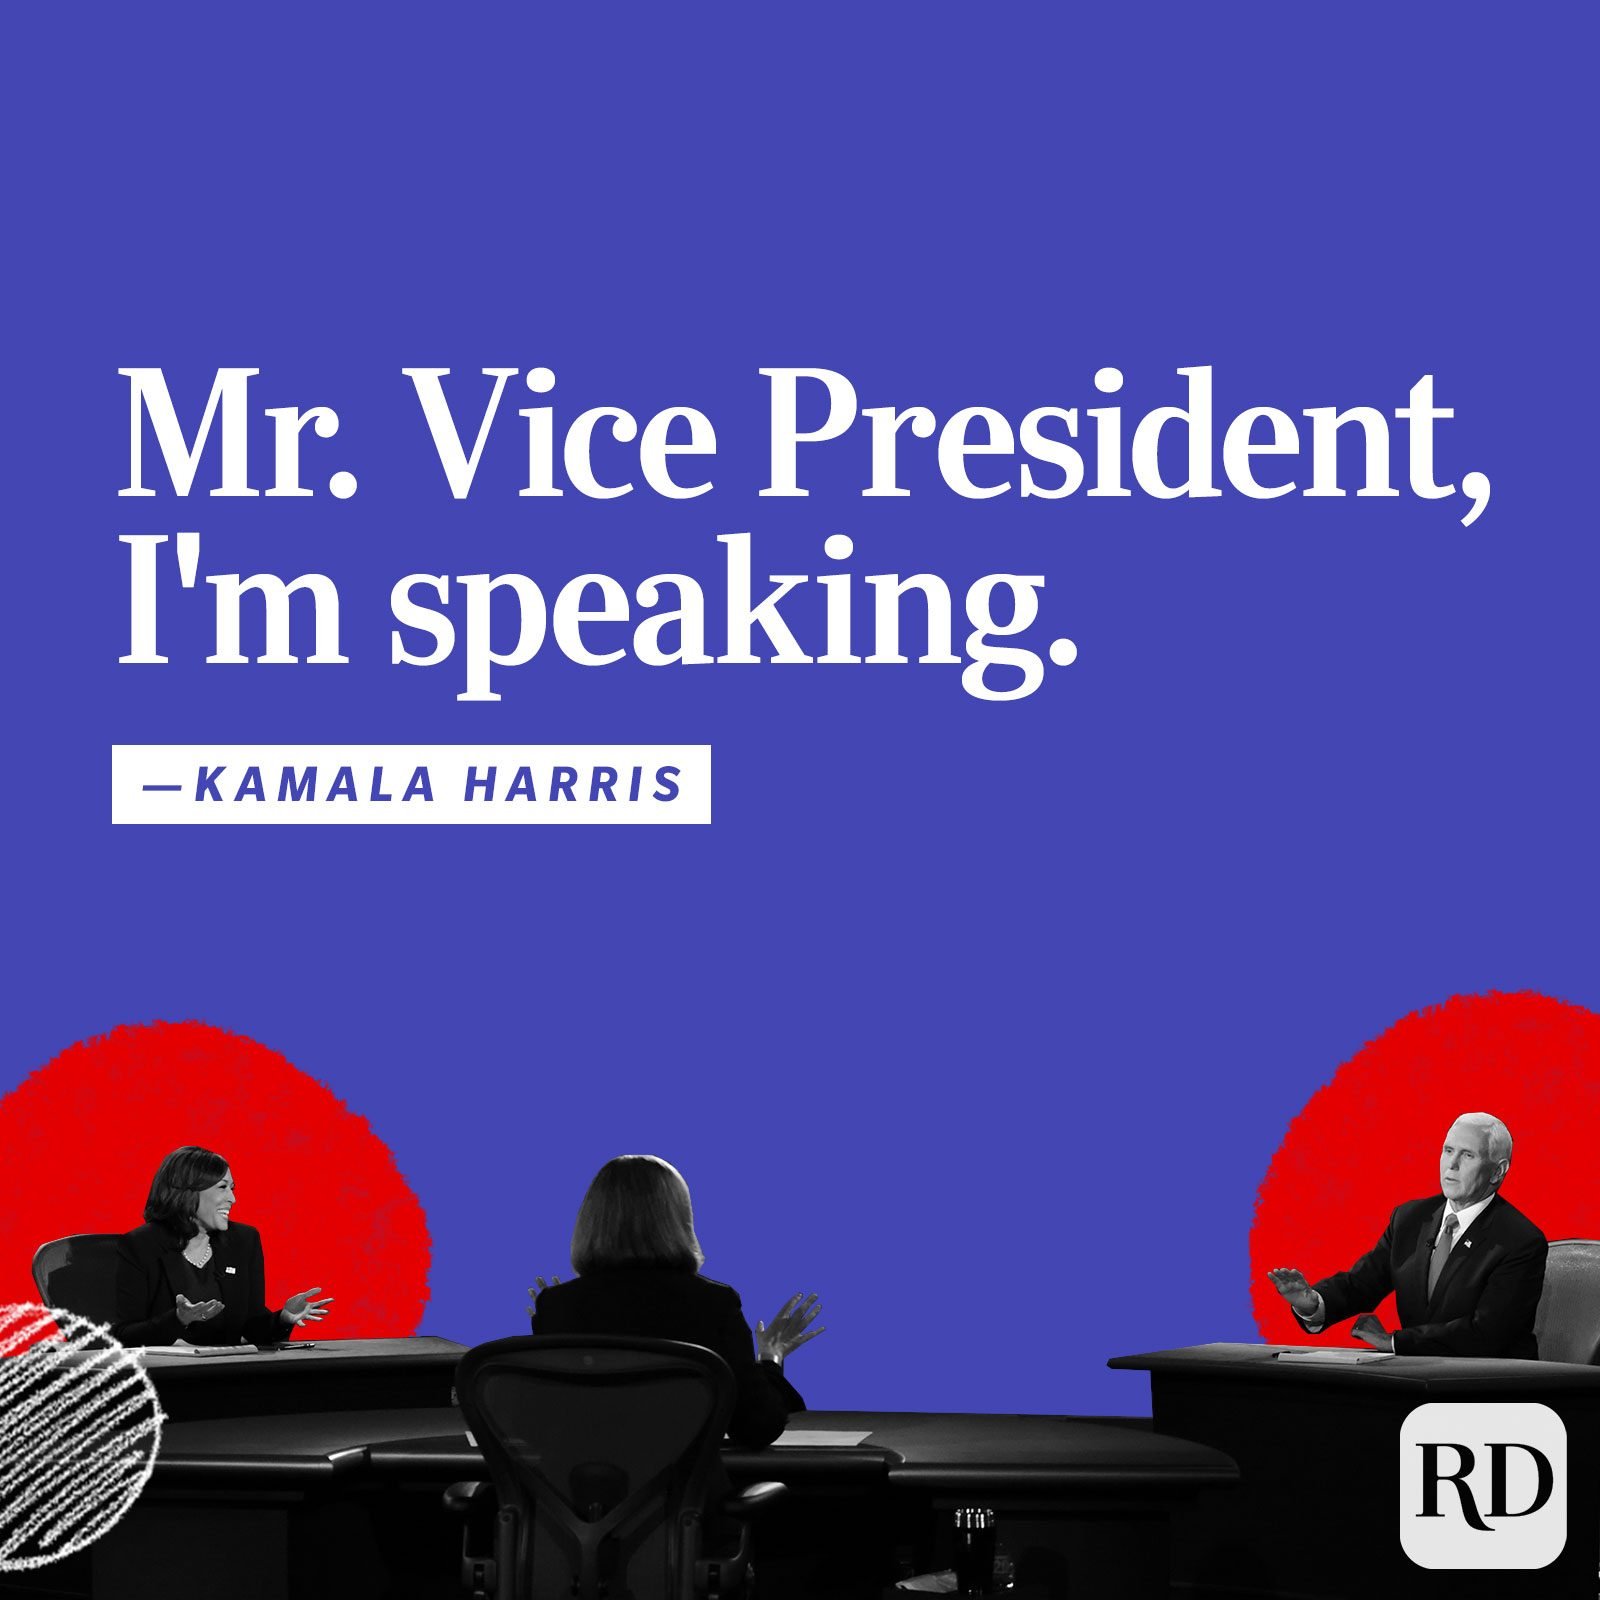 "Mr. Vice President, I'm speaking."